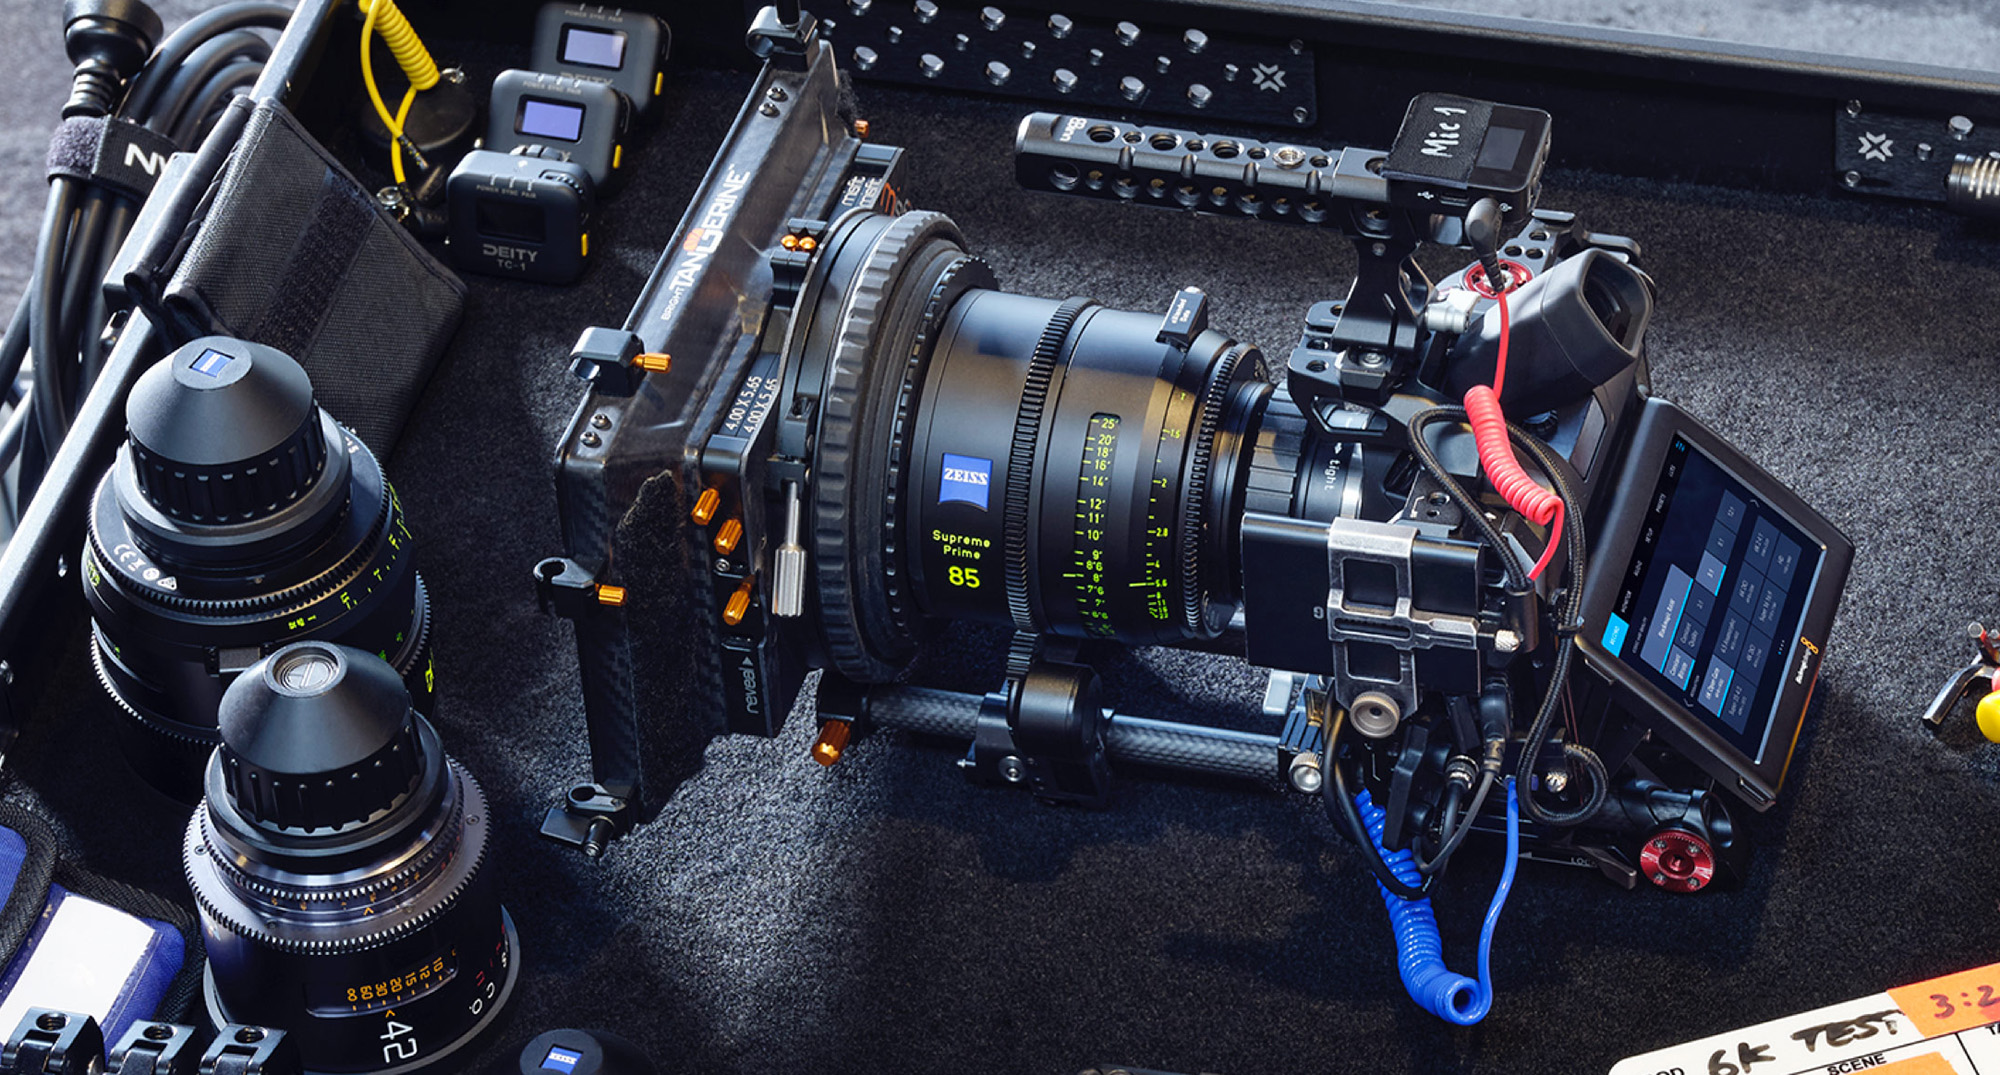 Review: Blackmagic Cinema Camera 6K - Blackmagic Design Expands Its Cinema Camera Lineup 4